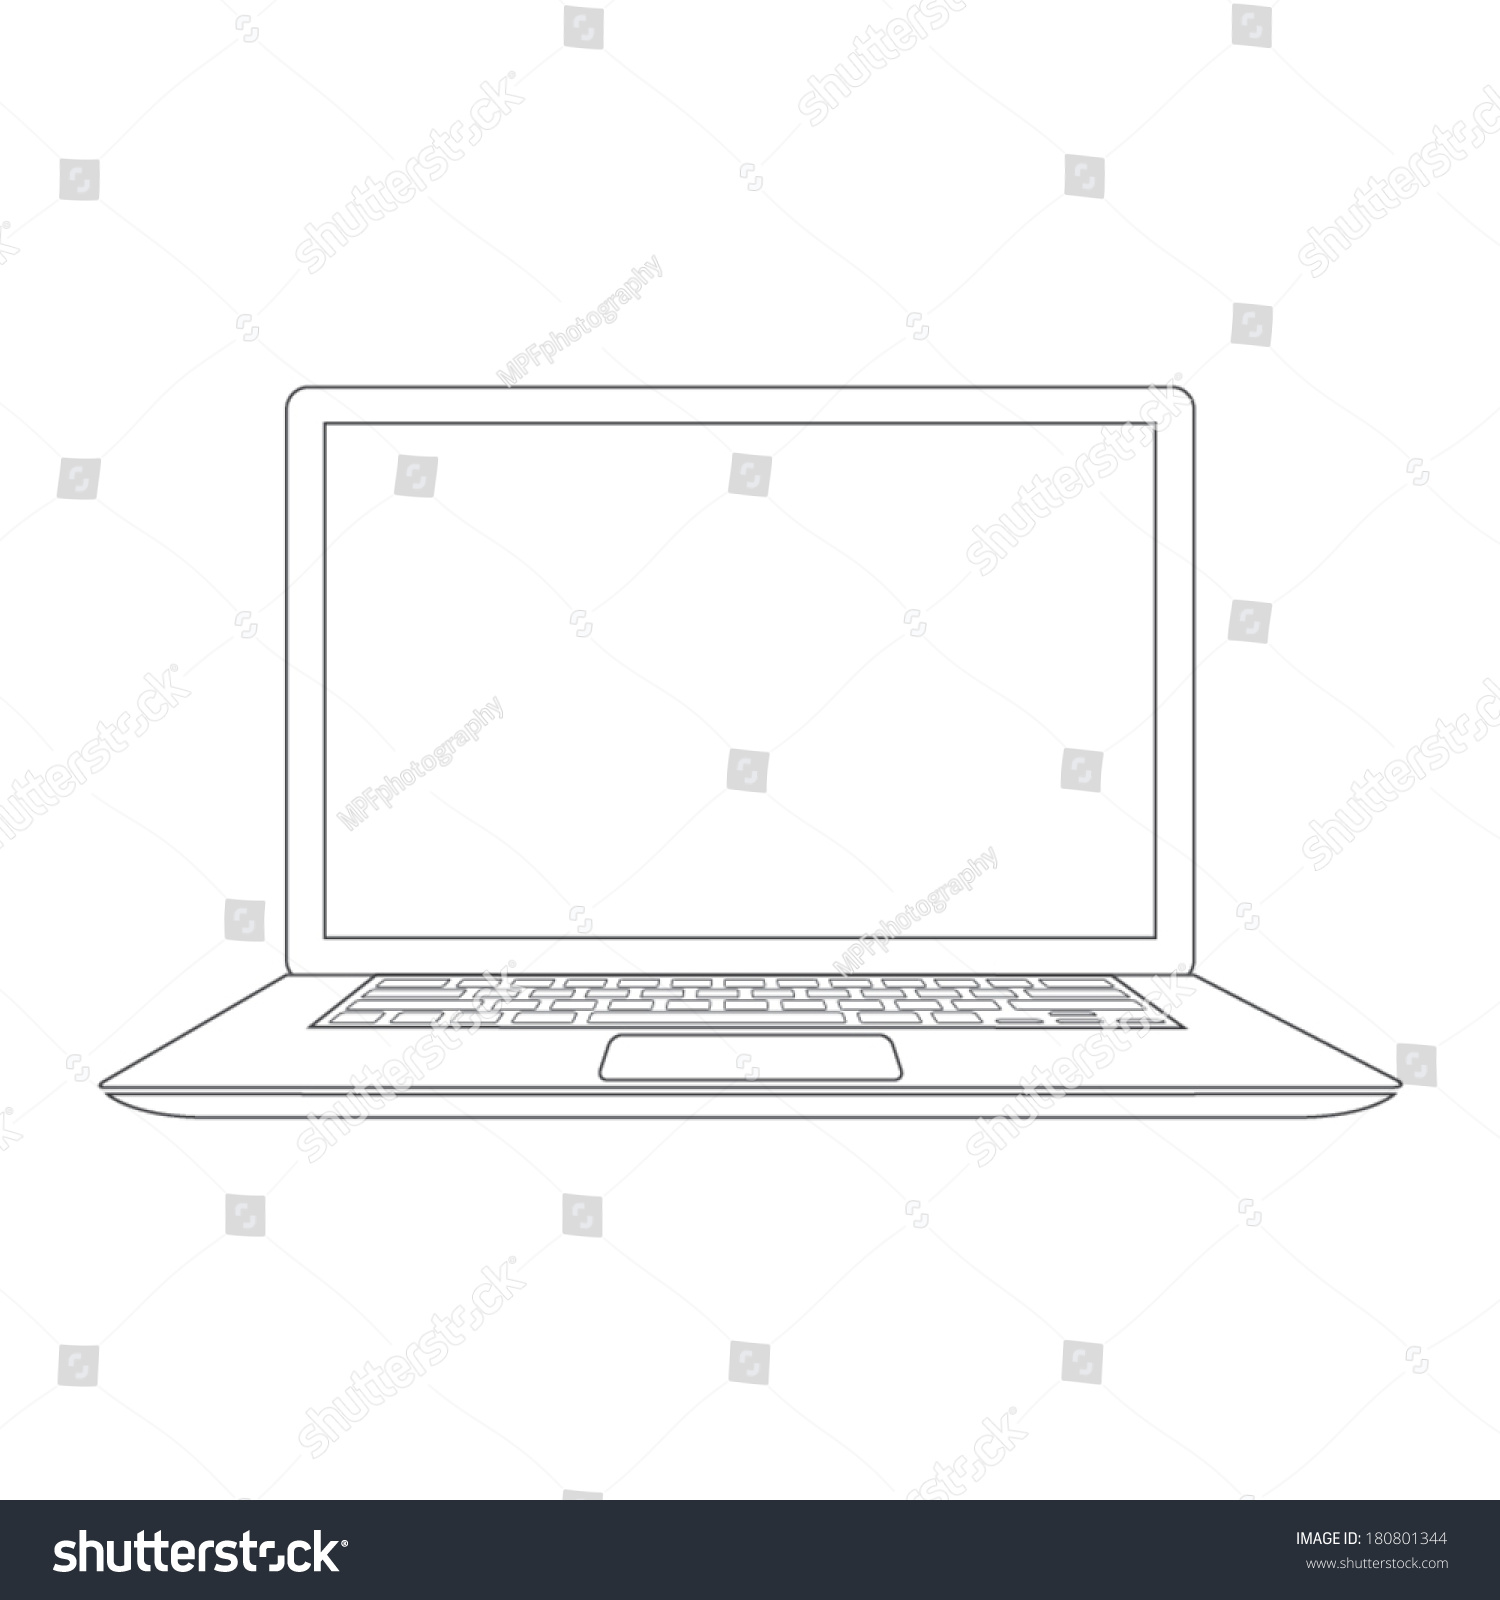 Outlined Laptop Vector Illustration - 180801344 : Shutterstock